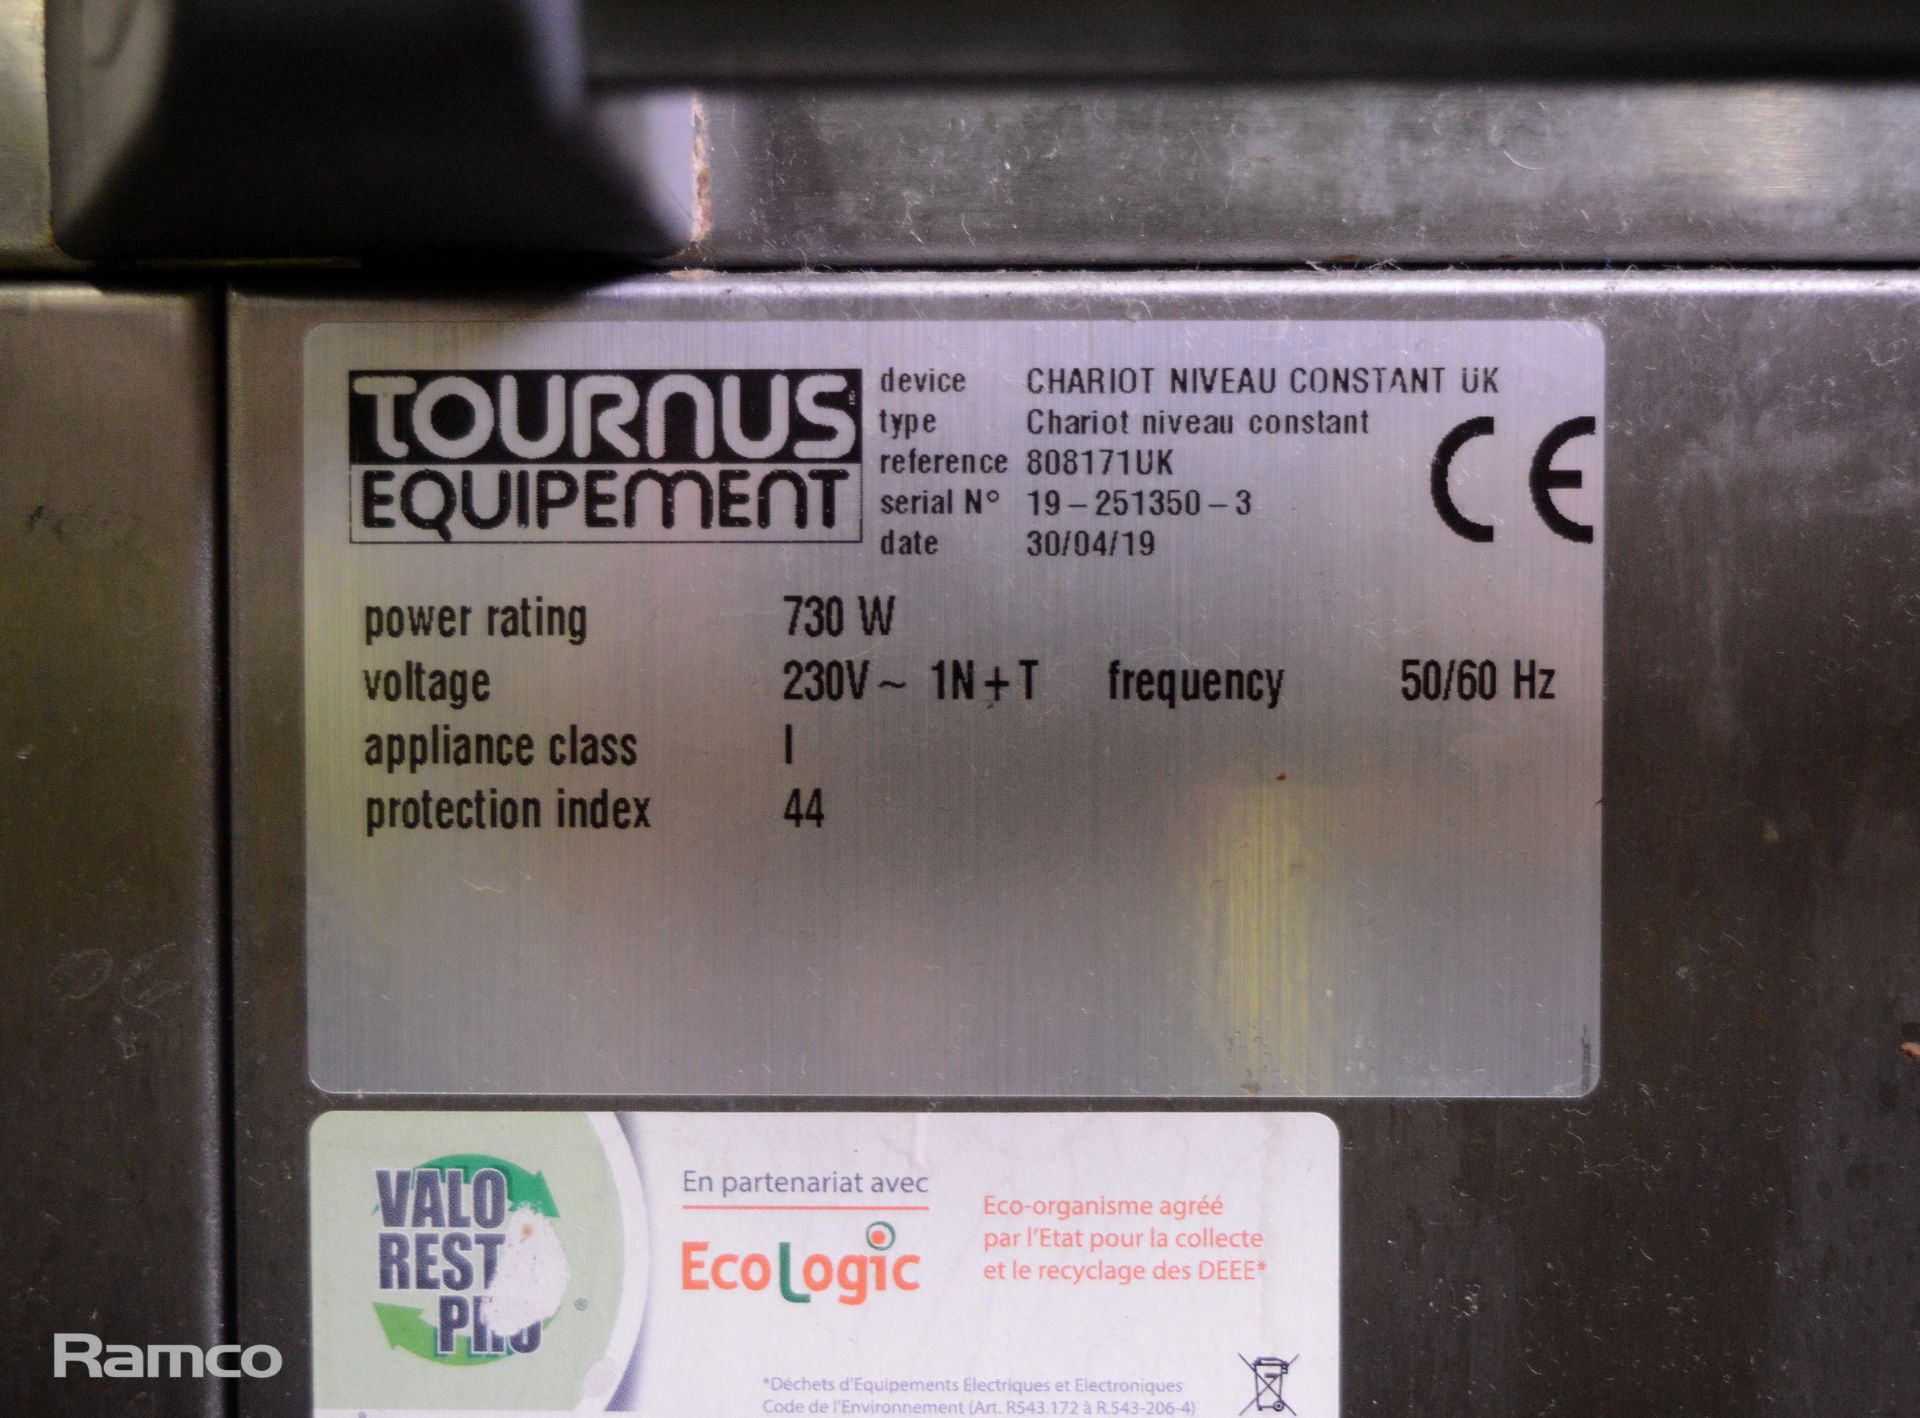 Tournus Equipment Chariot Niveau Constant Single Stack Mobile Heated Plate Dispenser 44x54x108cm - Image 3 of 5